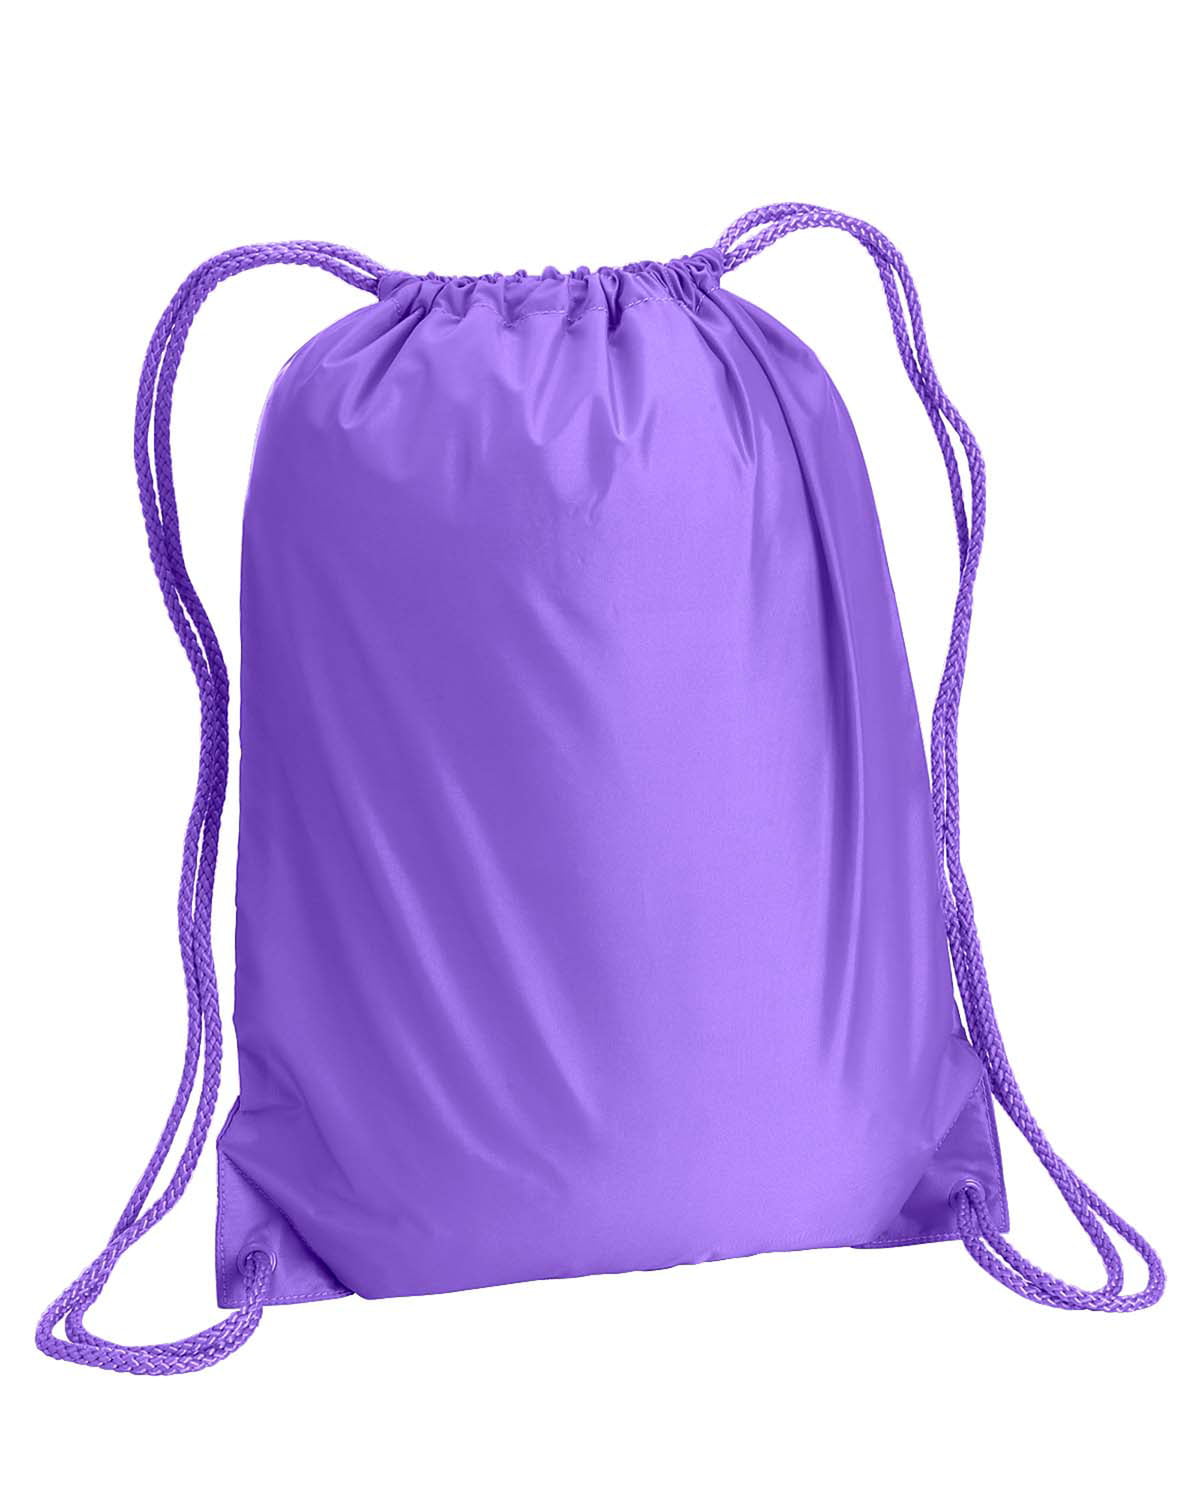 Liberty Bags Drawstring Backpack 14 x18 Cinch Sack School Tote Bag Sport 8881 